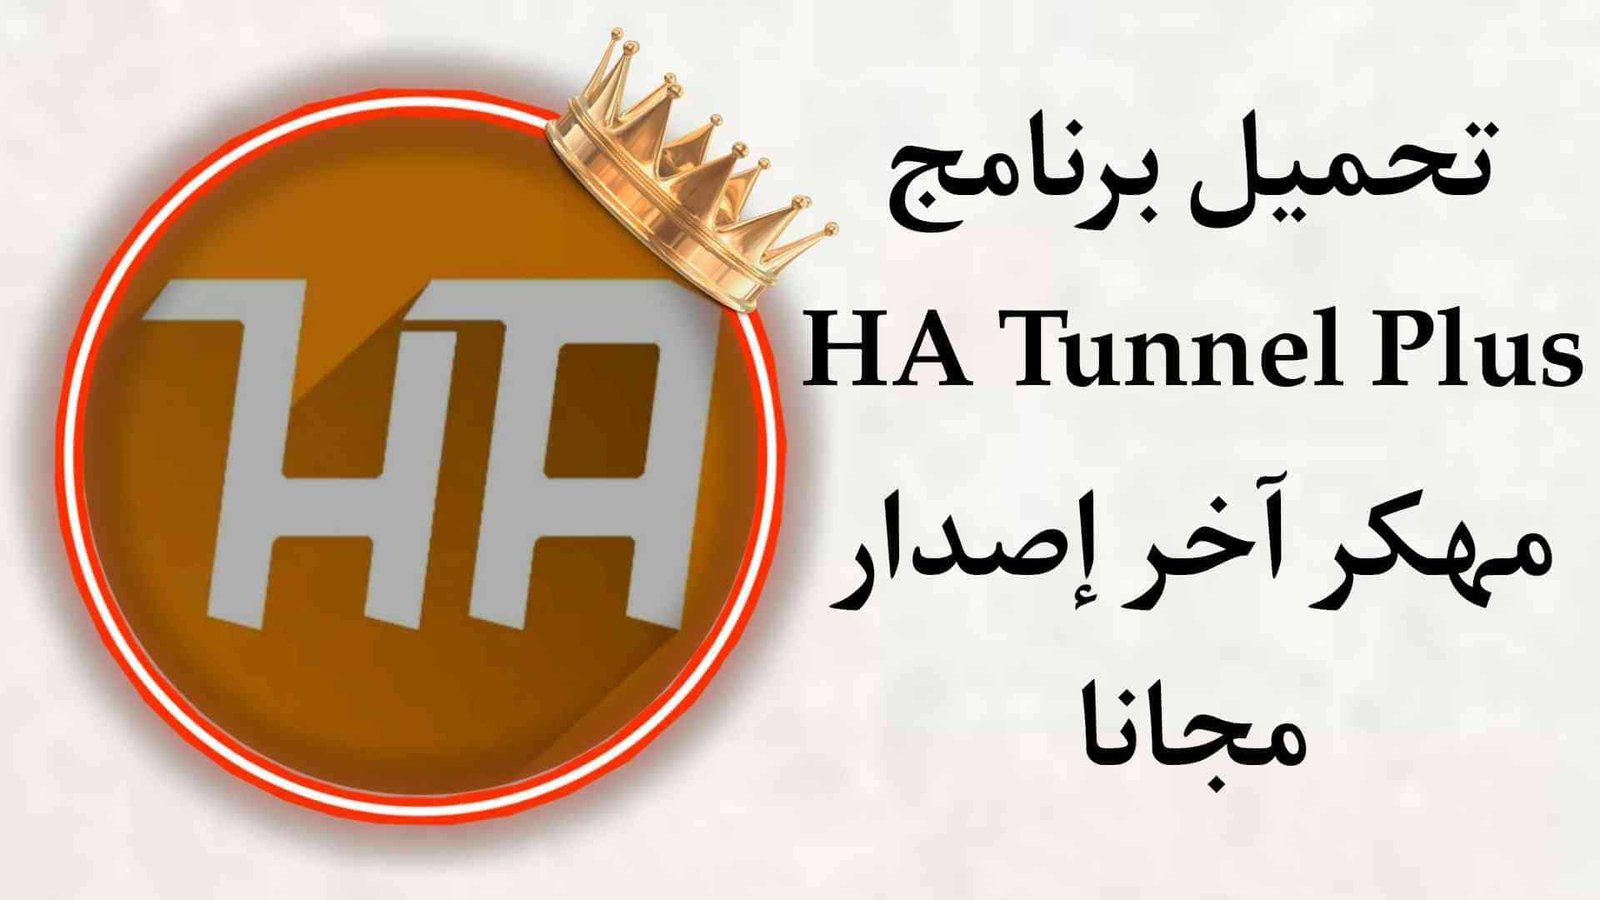 Ha Tunnel Plus Telegram Groups Link